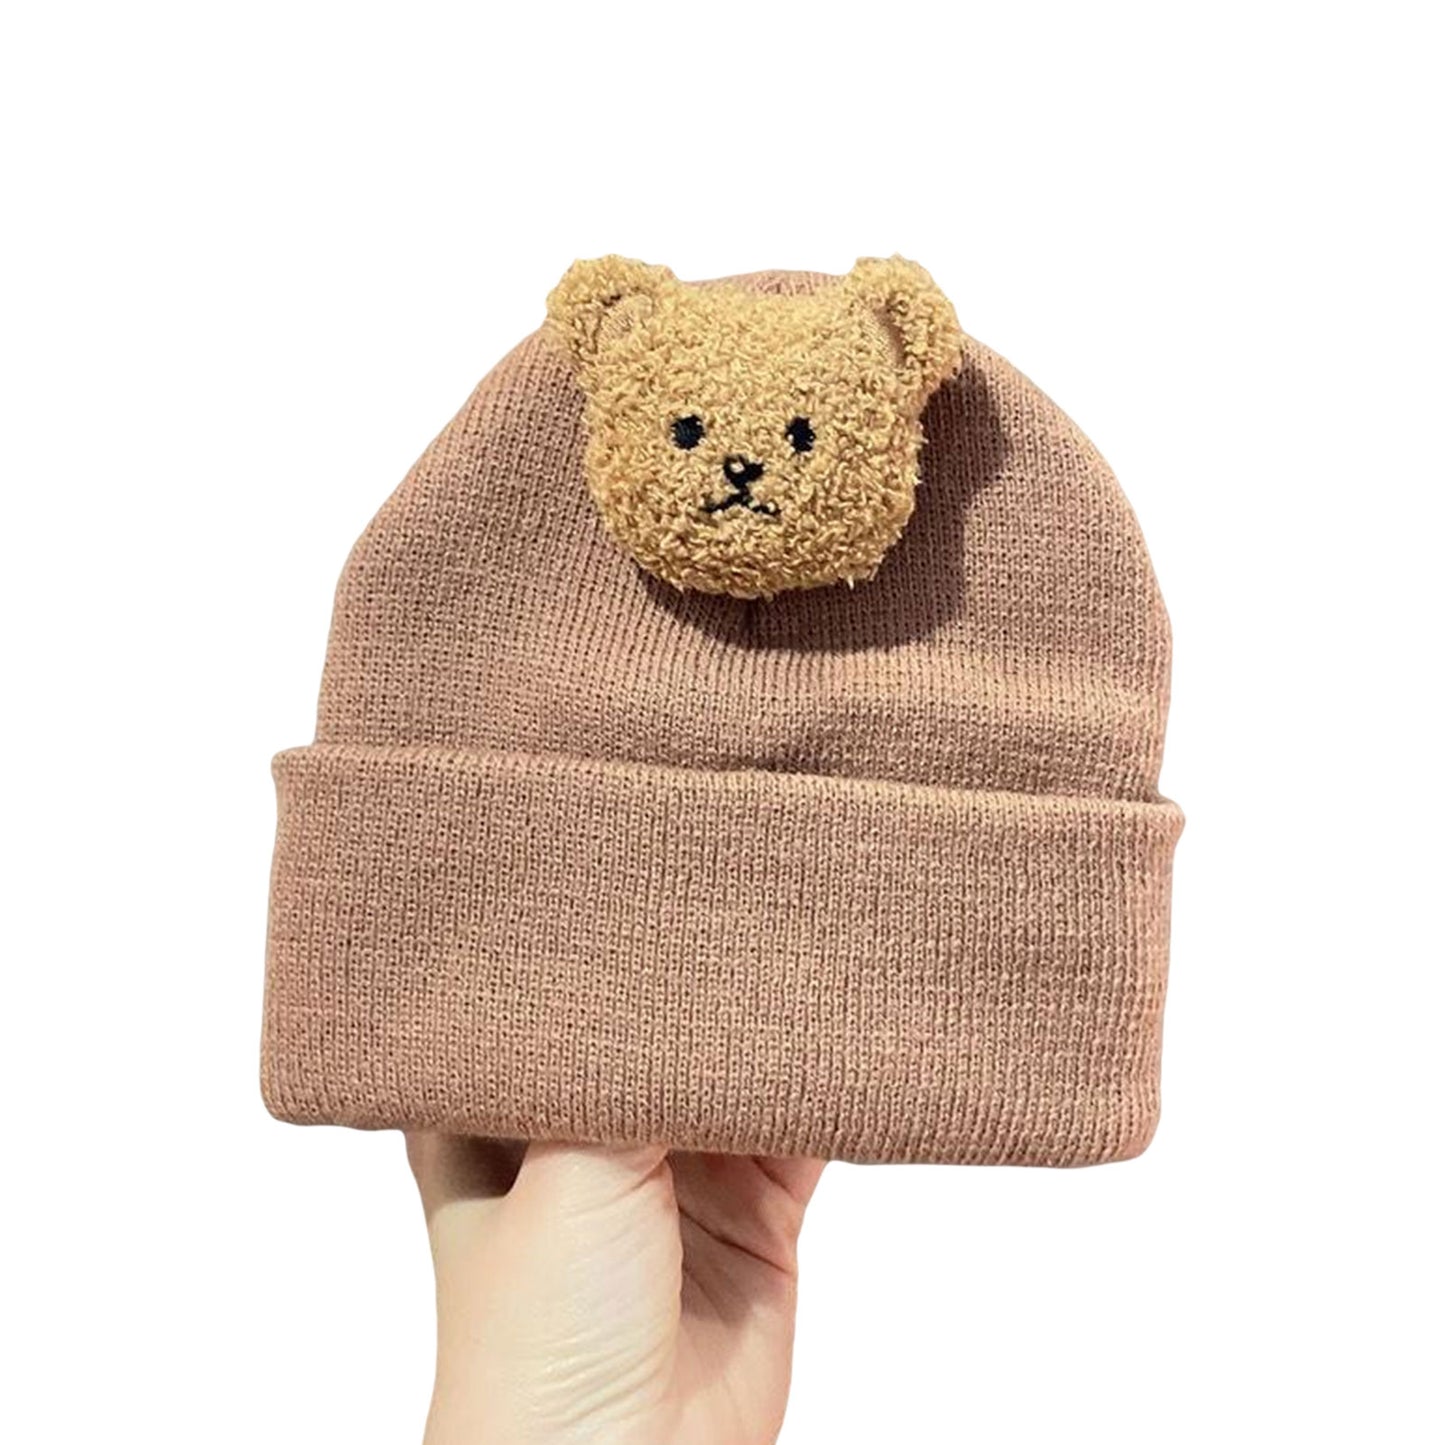 Bear Children's Cap